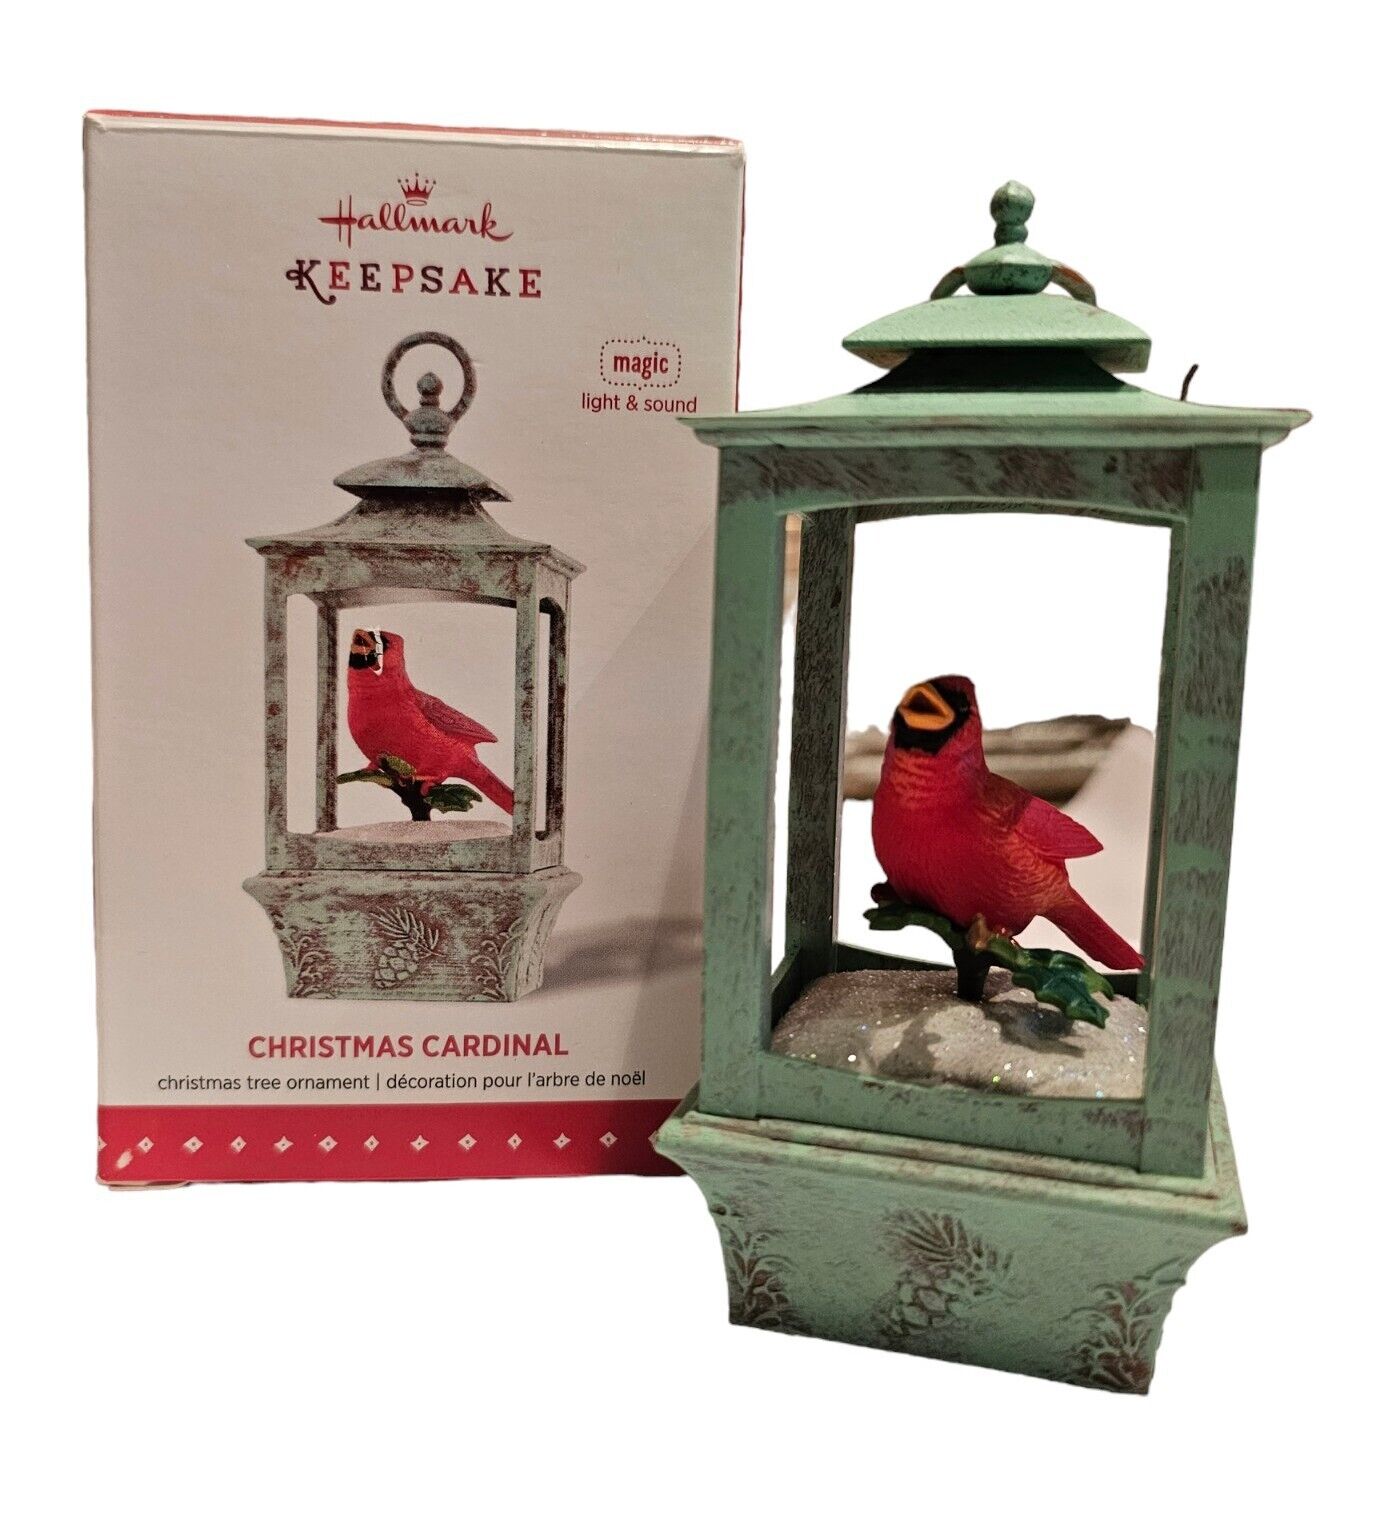 2015 Hallmark Keepsake Christmas Cardinal Holiday Ornament -Magic Light & Sound